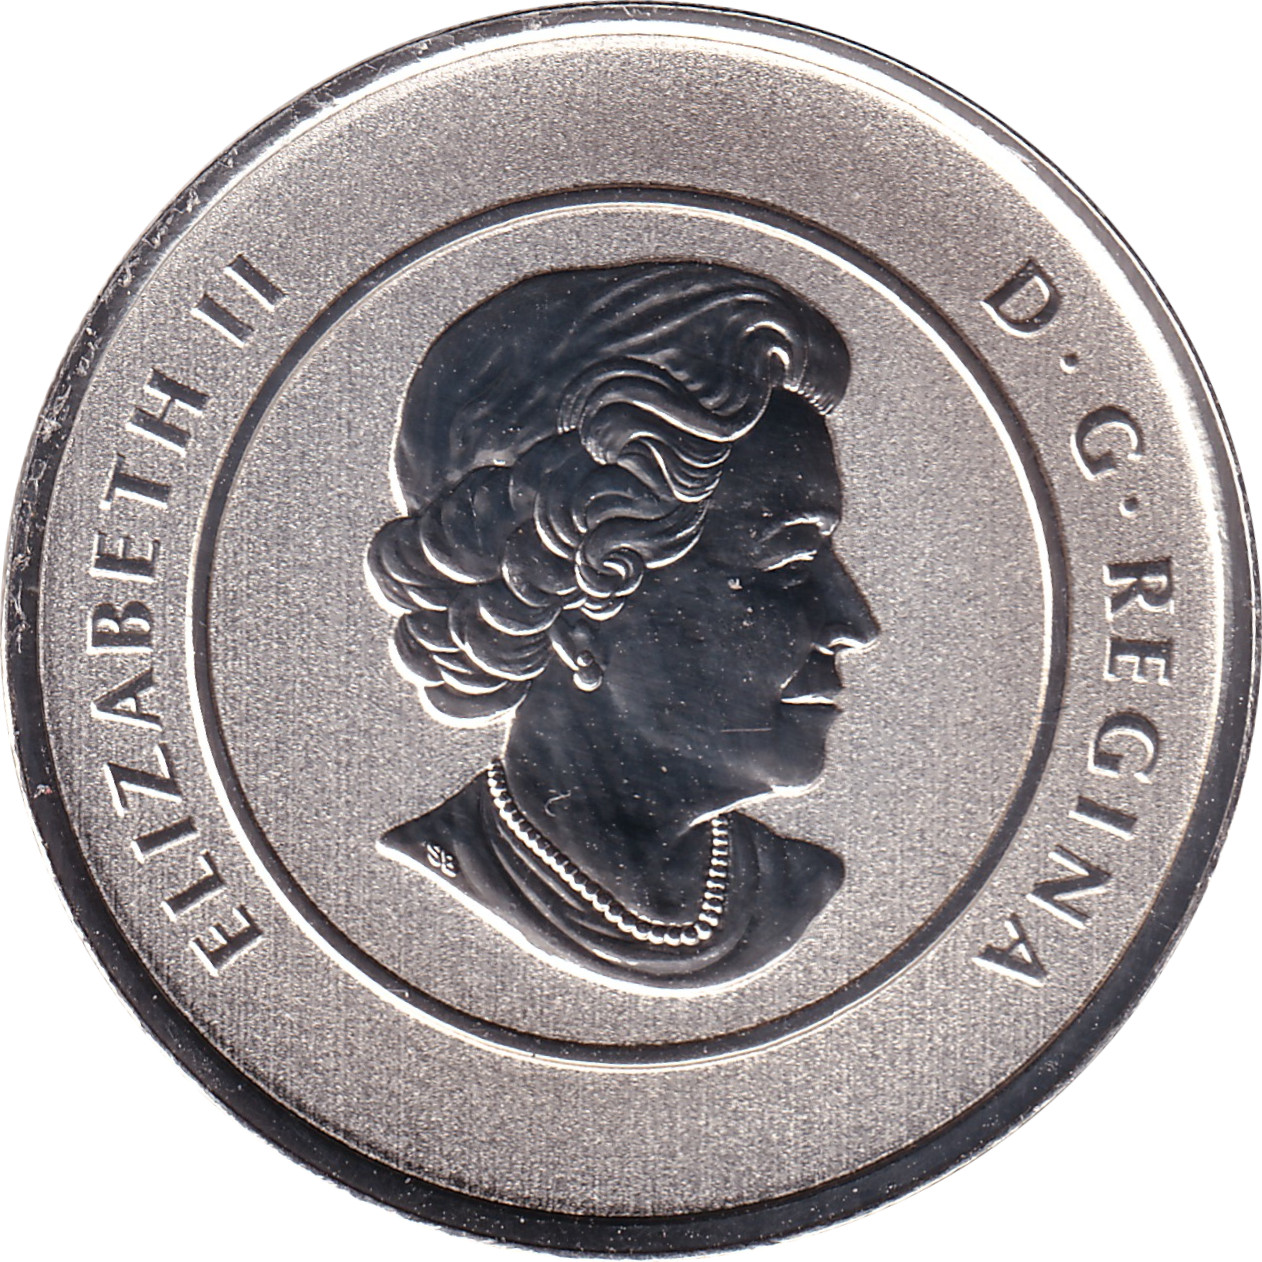 20 dollars - Farewell one cent coin